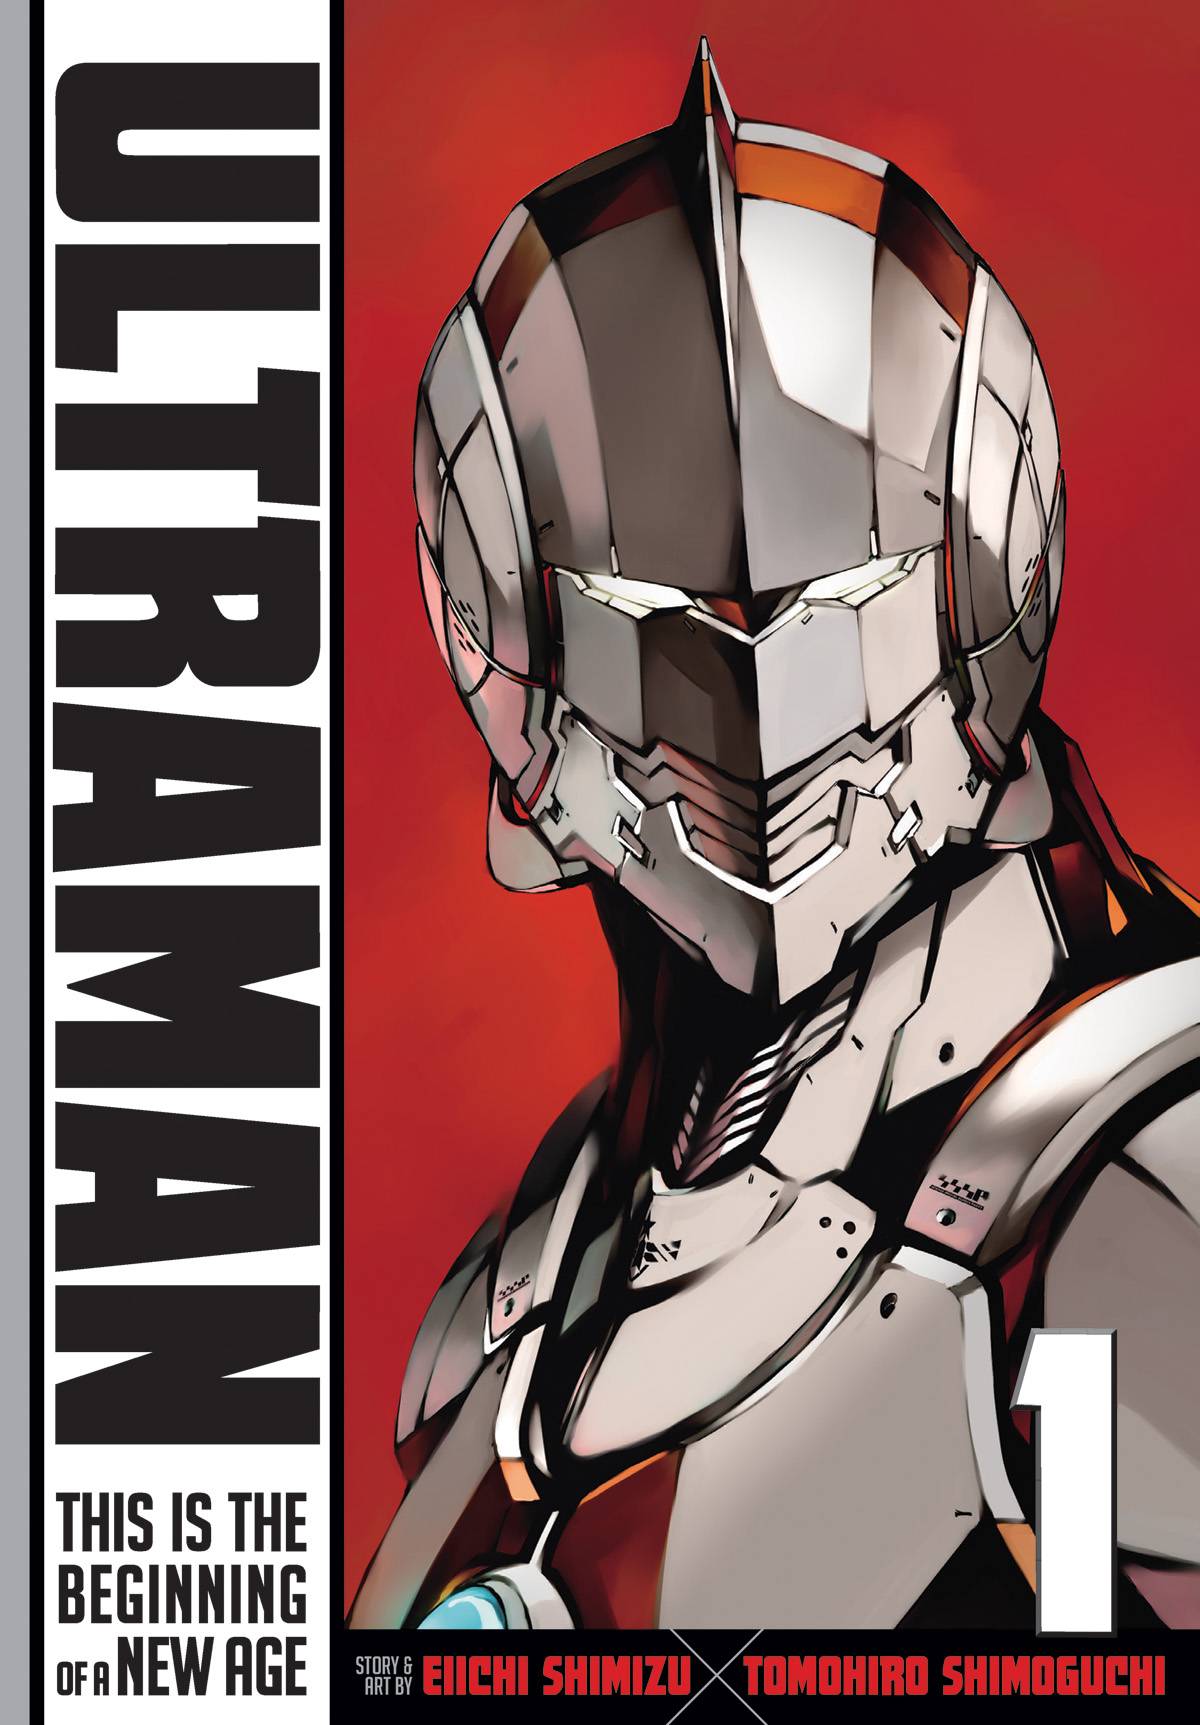 Ultraman Manga Volume 1